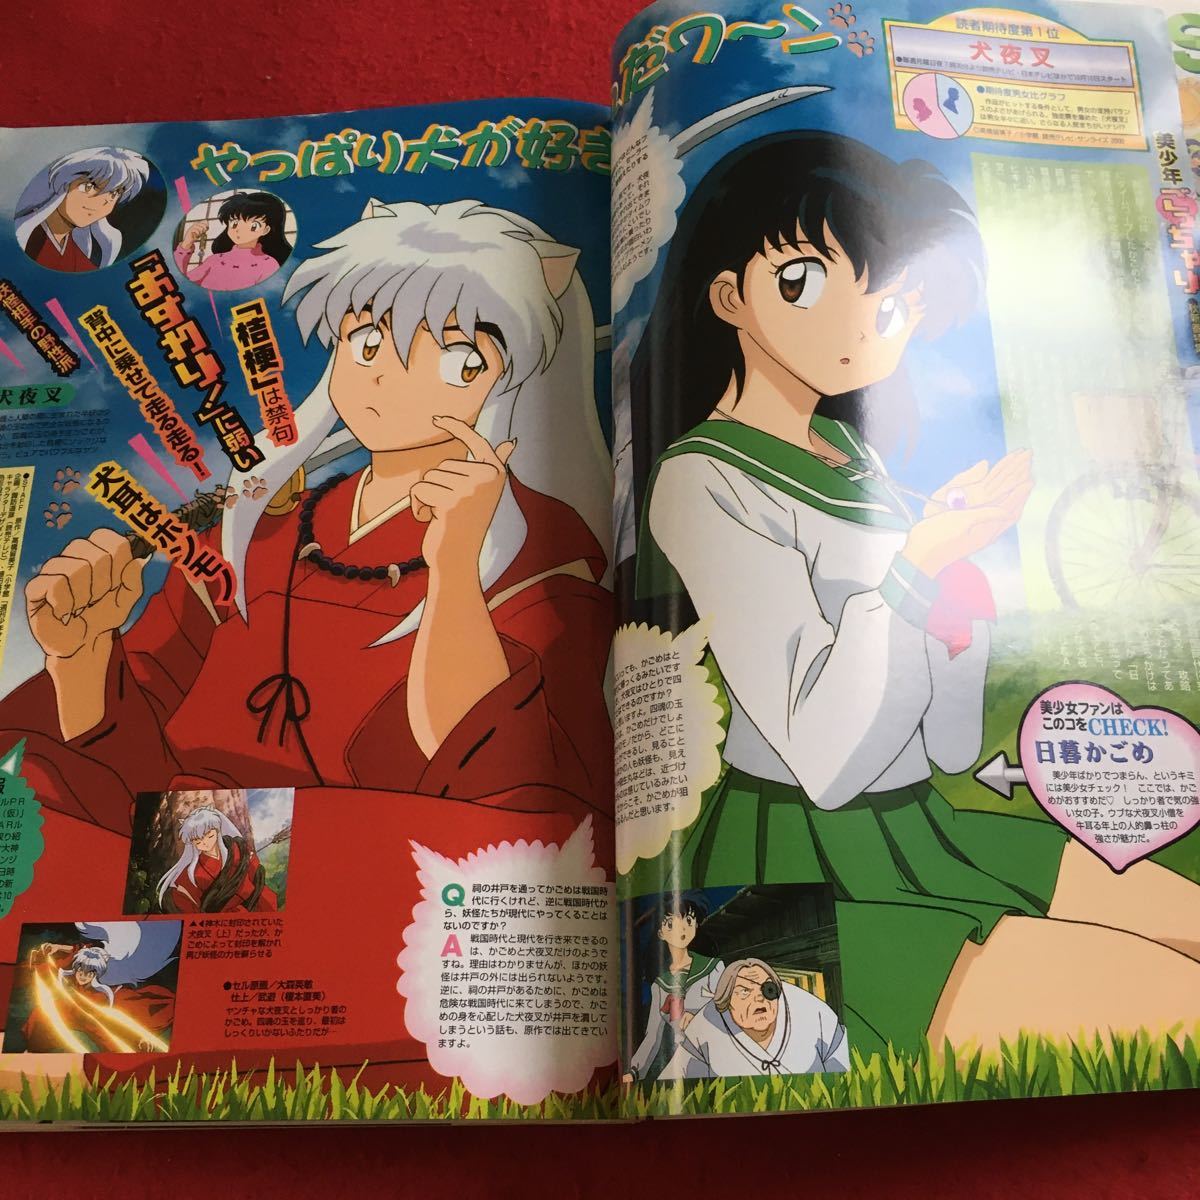 Y21-080 Animedia 11 month number 2000 year issue most . chronicle Inu Yasha Try zeno Sakura Taisen Love Hina H×H digimon One-piece anime Gakken 